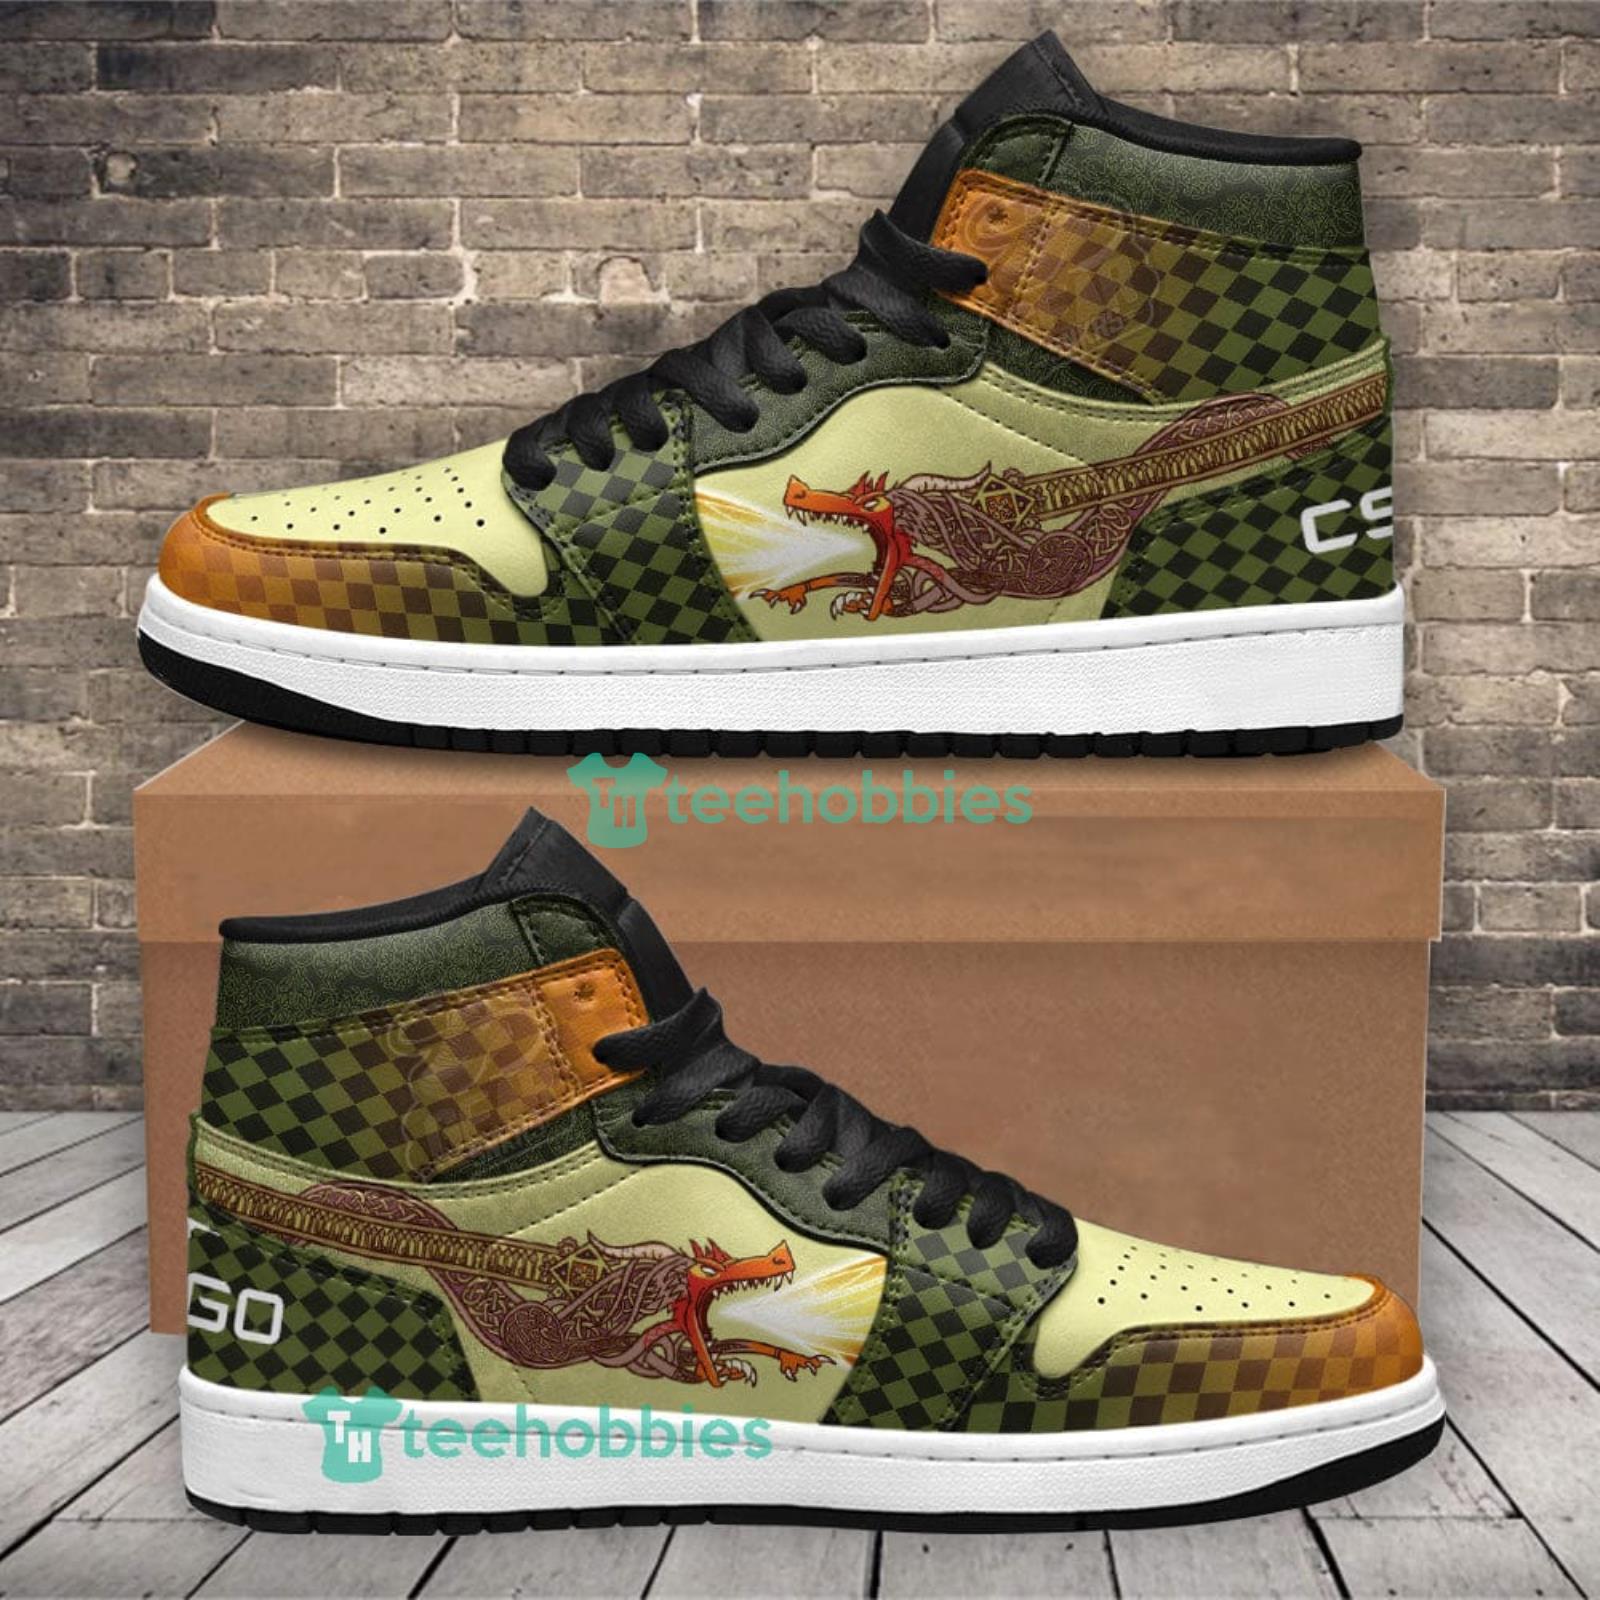 Dragon Lore Counter-Strike Skins Air Jordan Hightop Shoes Sneakers For Men And Women Product Photo 1